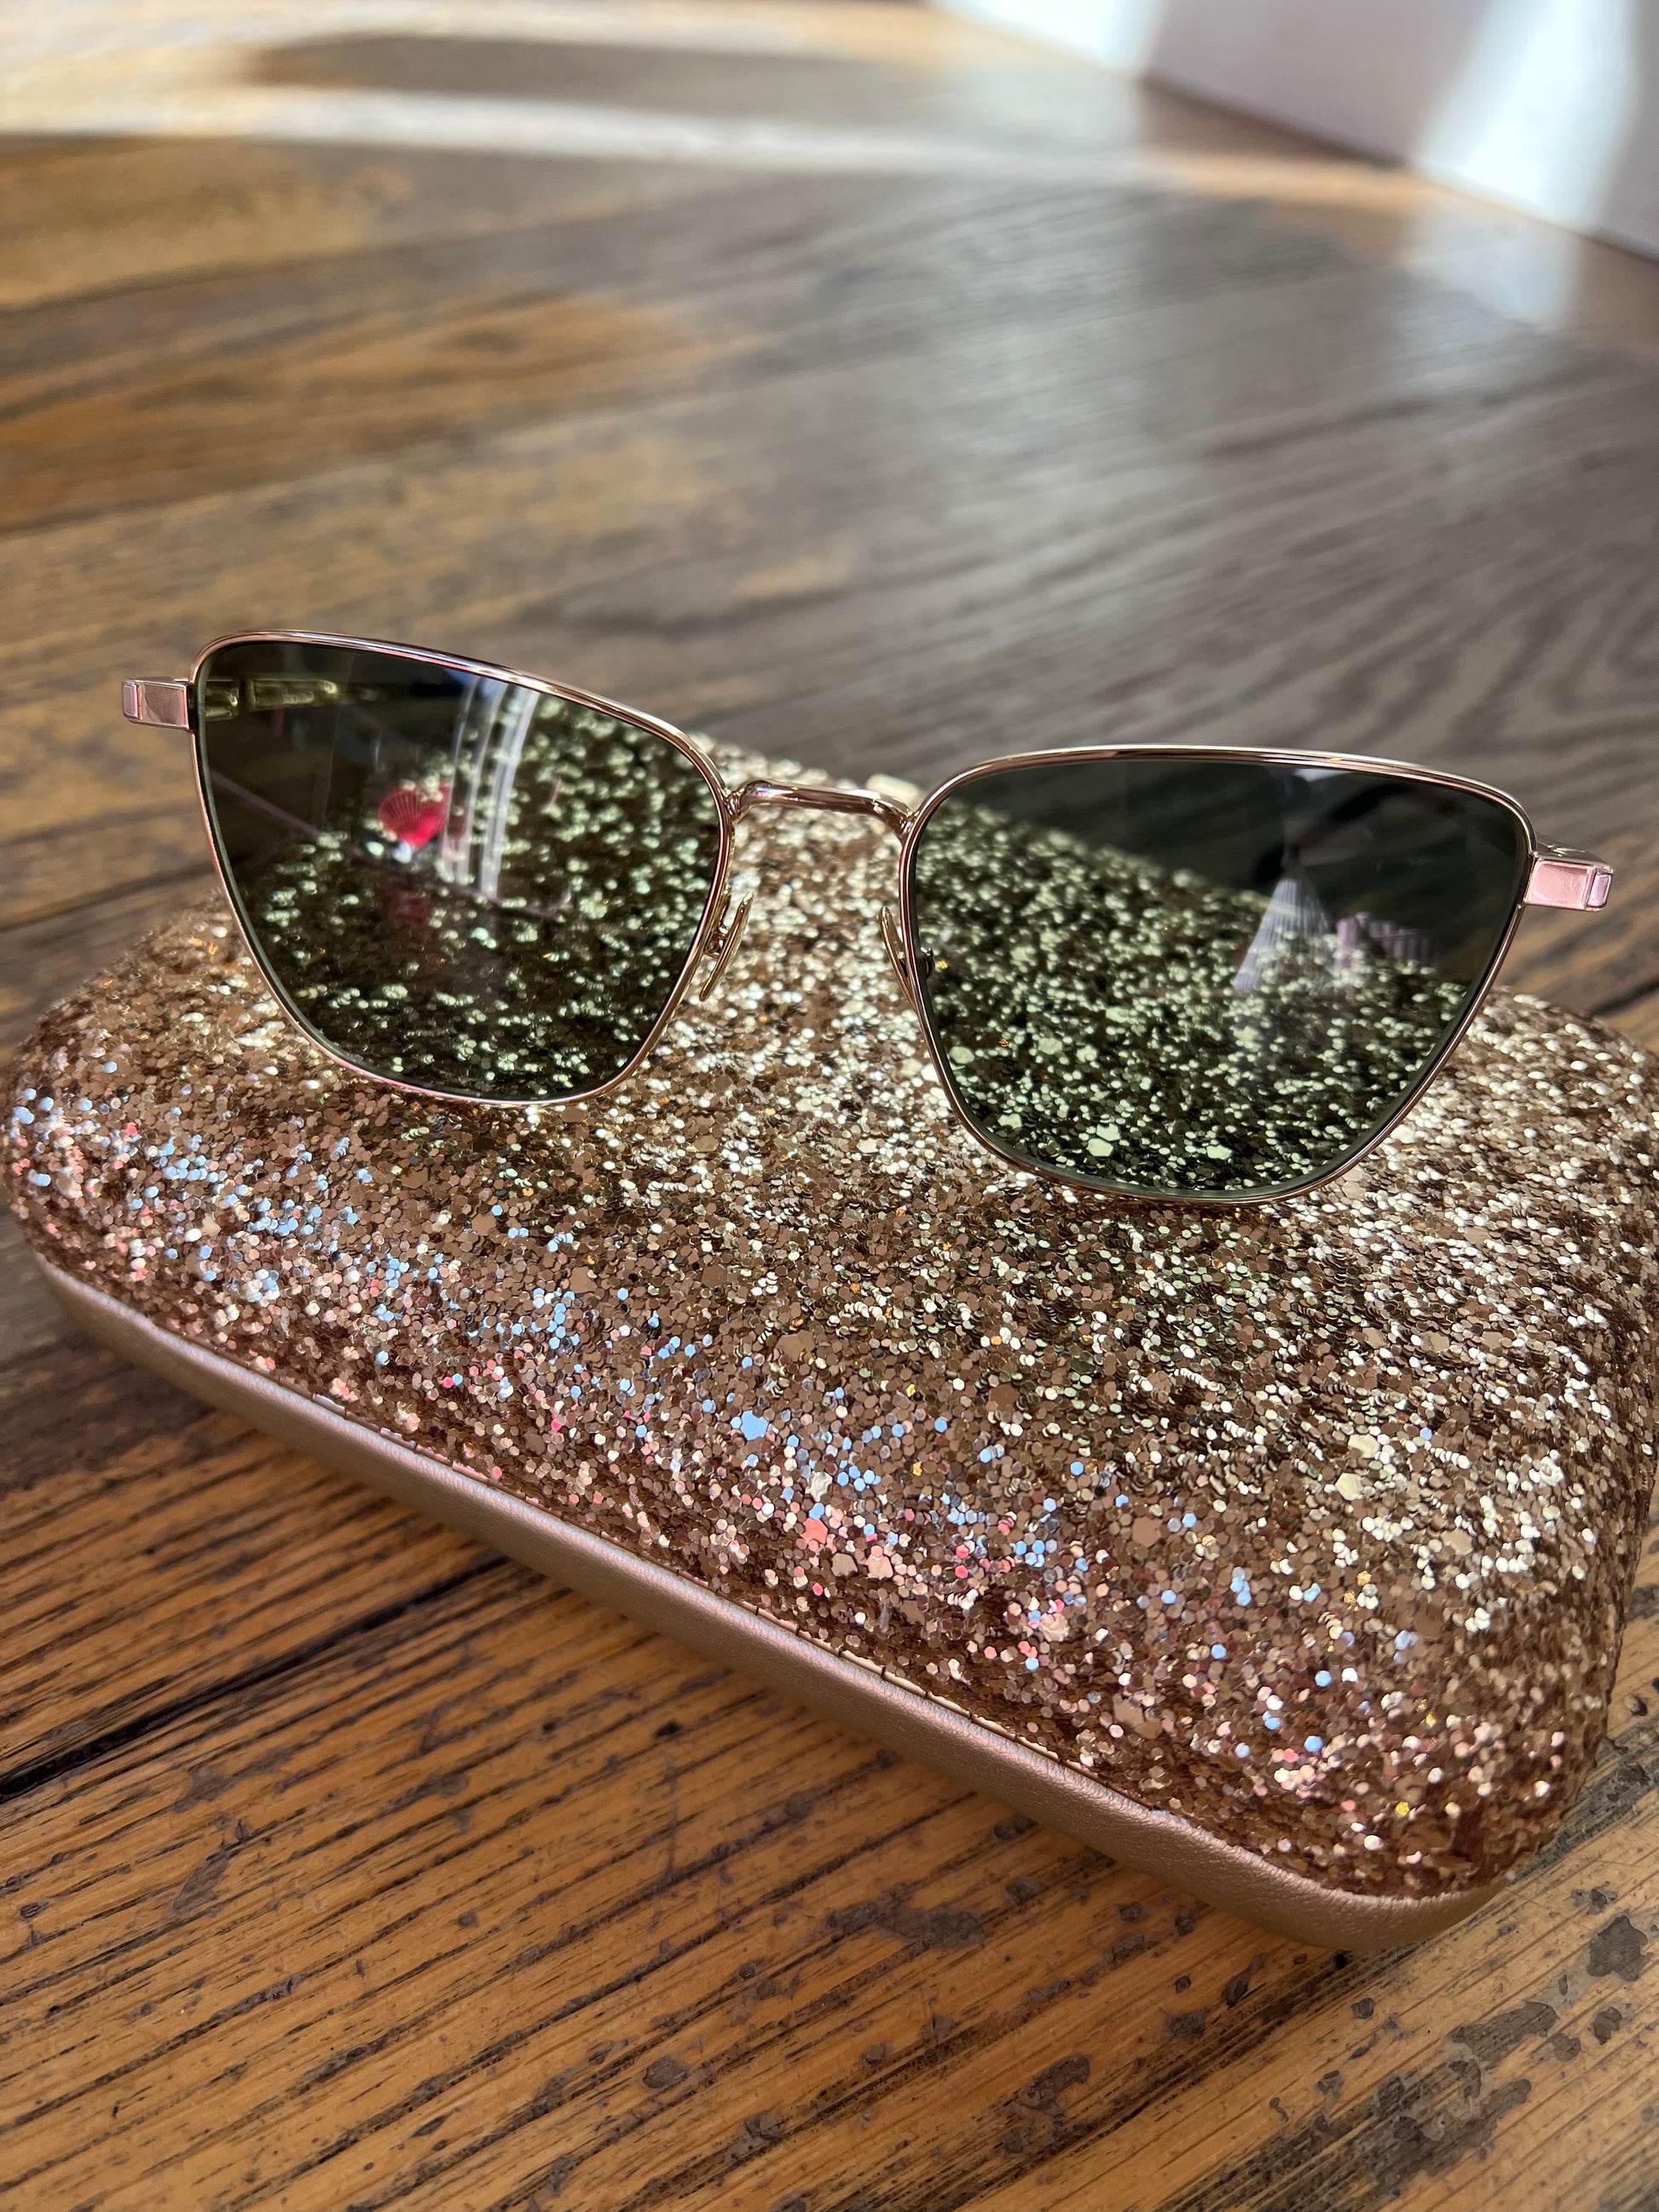 gold cateye sunglasses